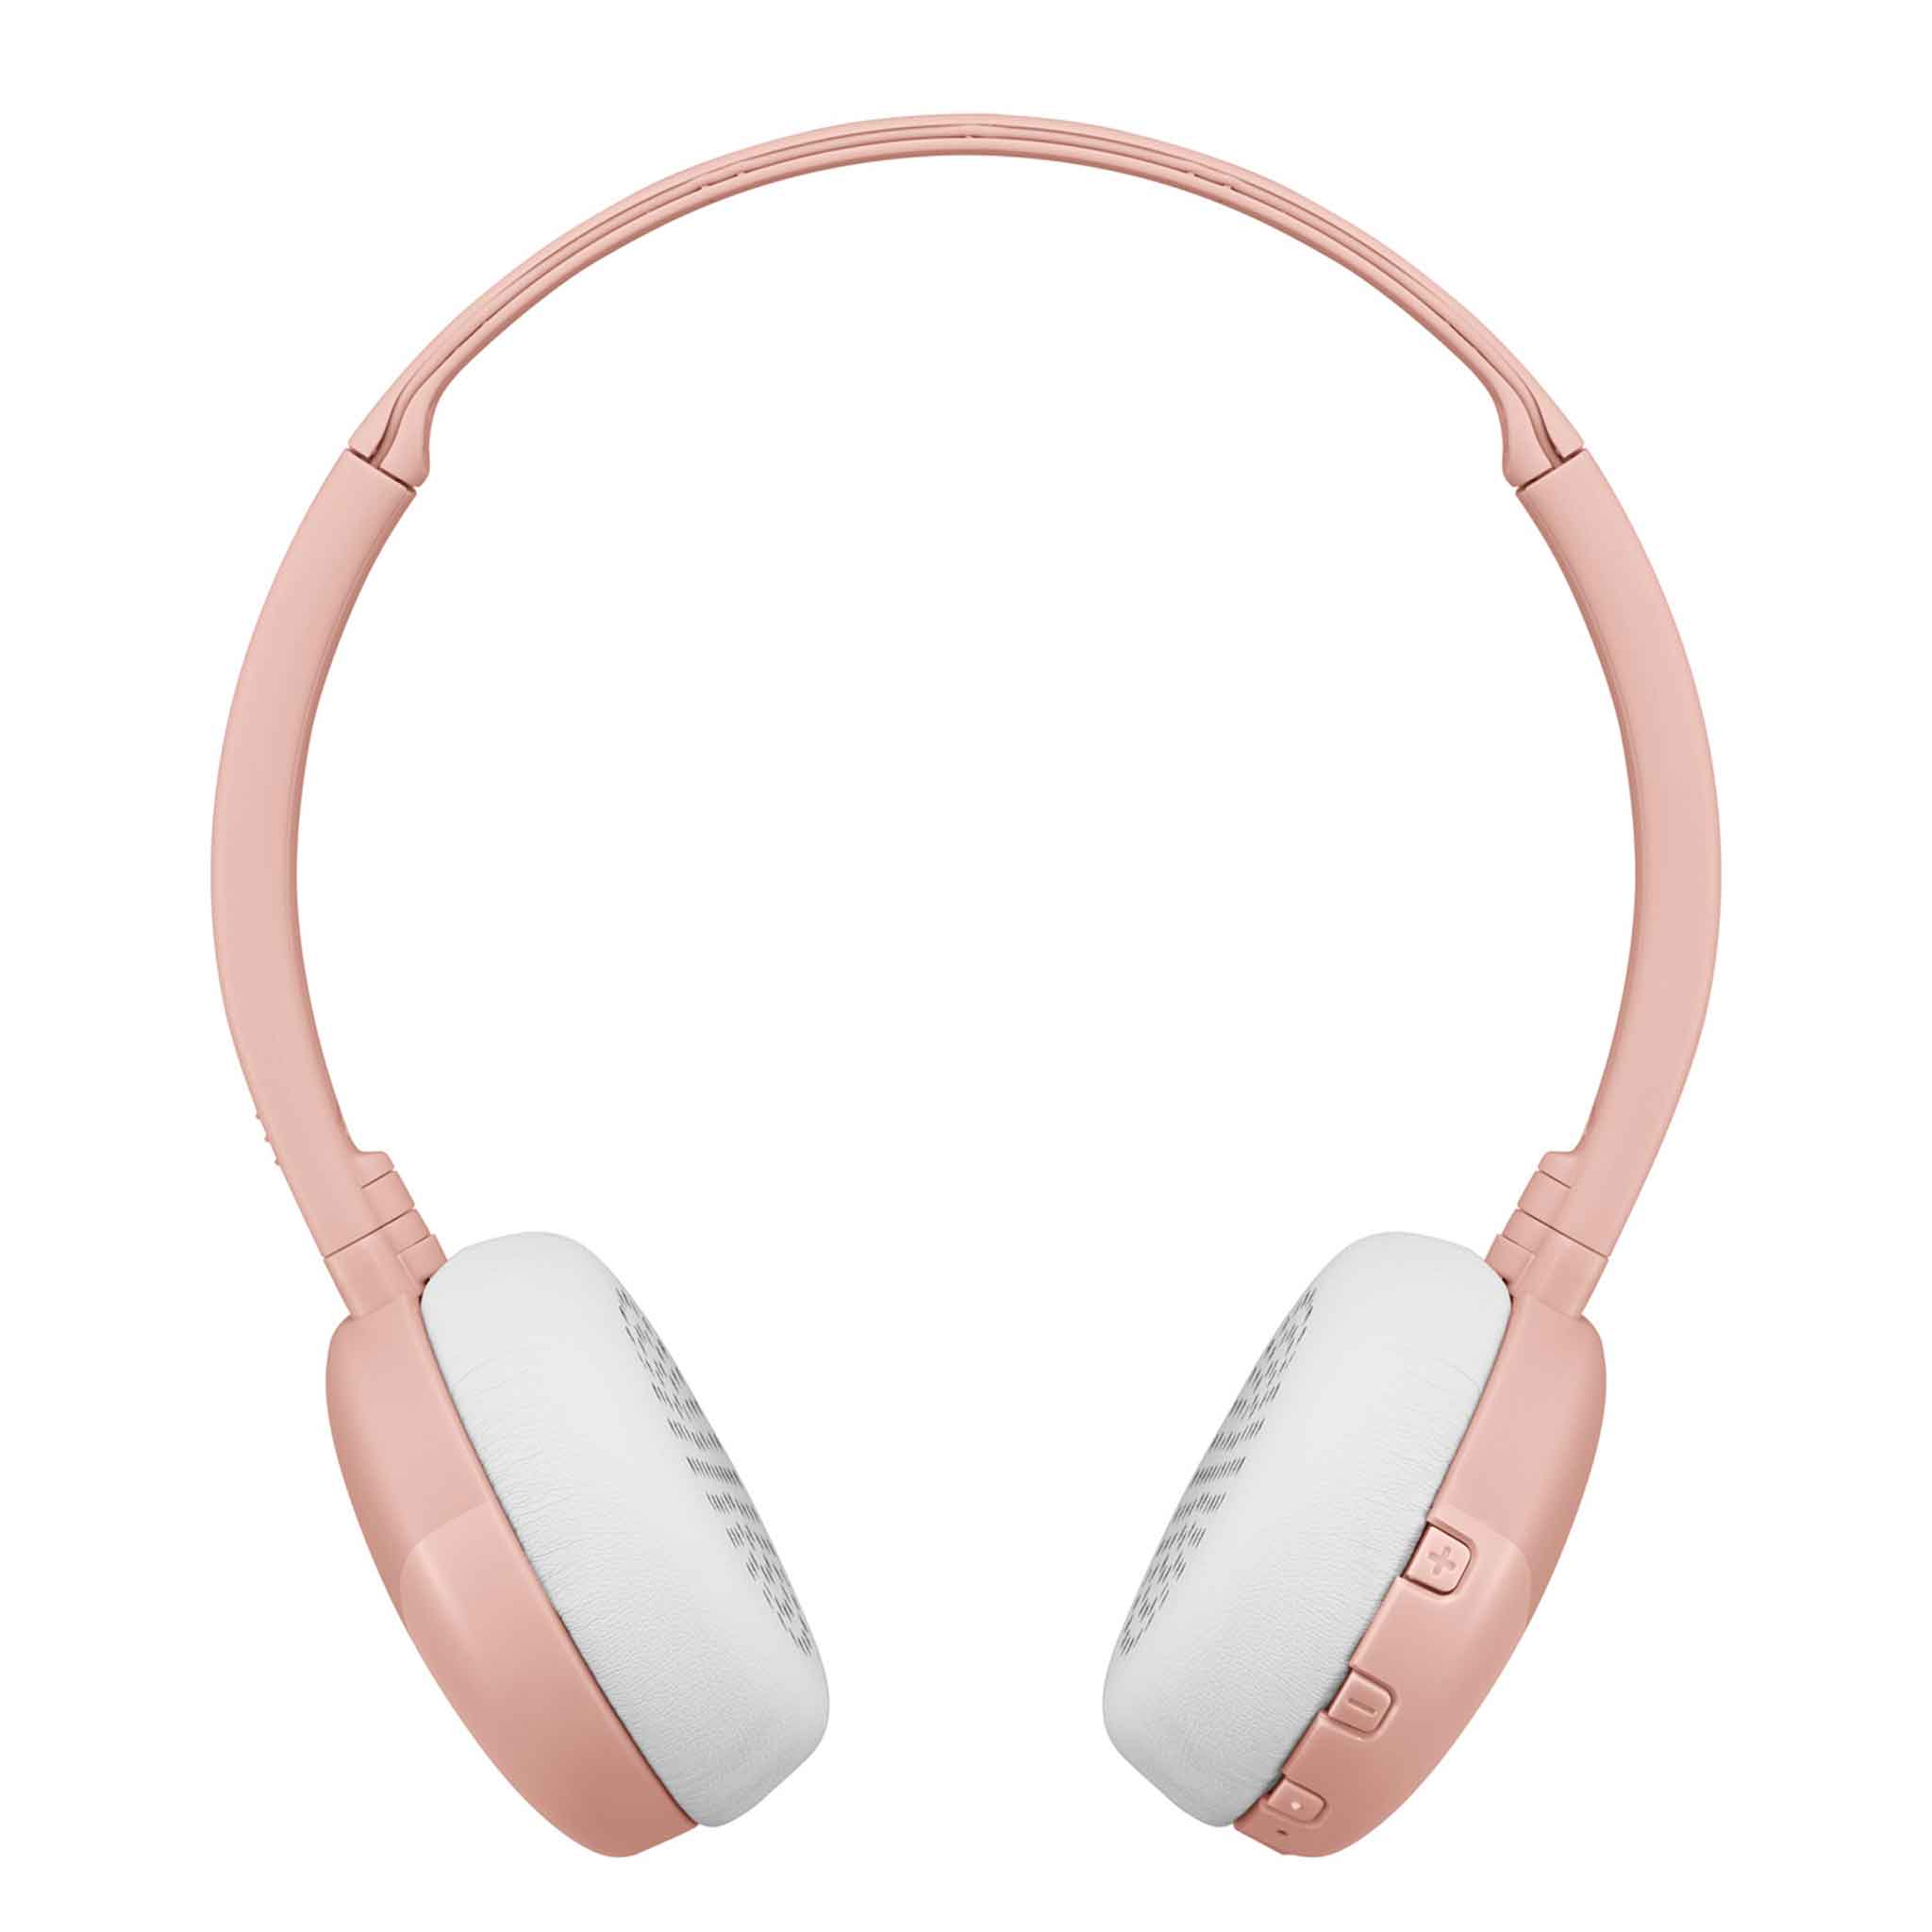 HA-S22W in Pink Bluetooth Wireless Headphones side view